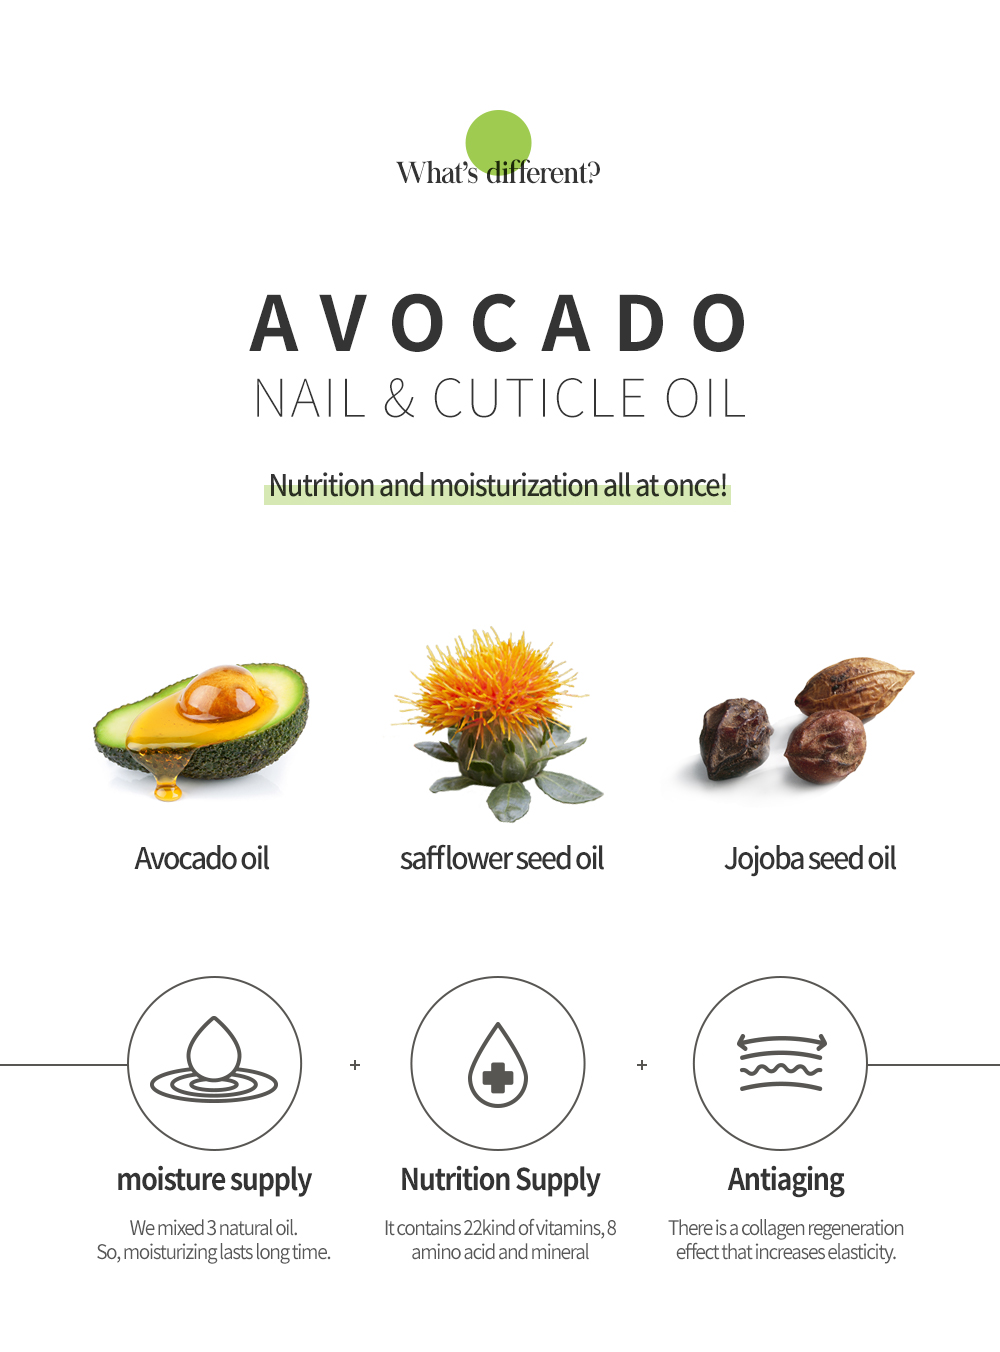 Usage of Avocado Nail& Cuticle Oil